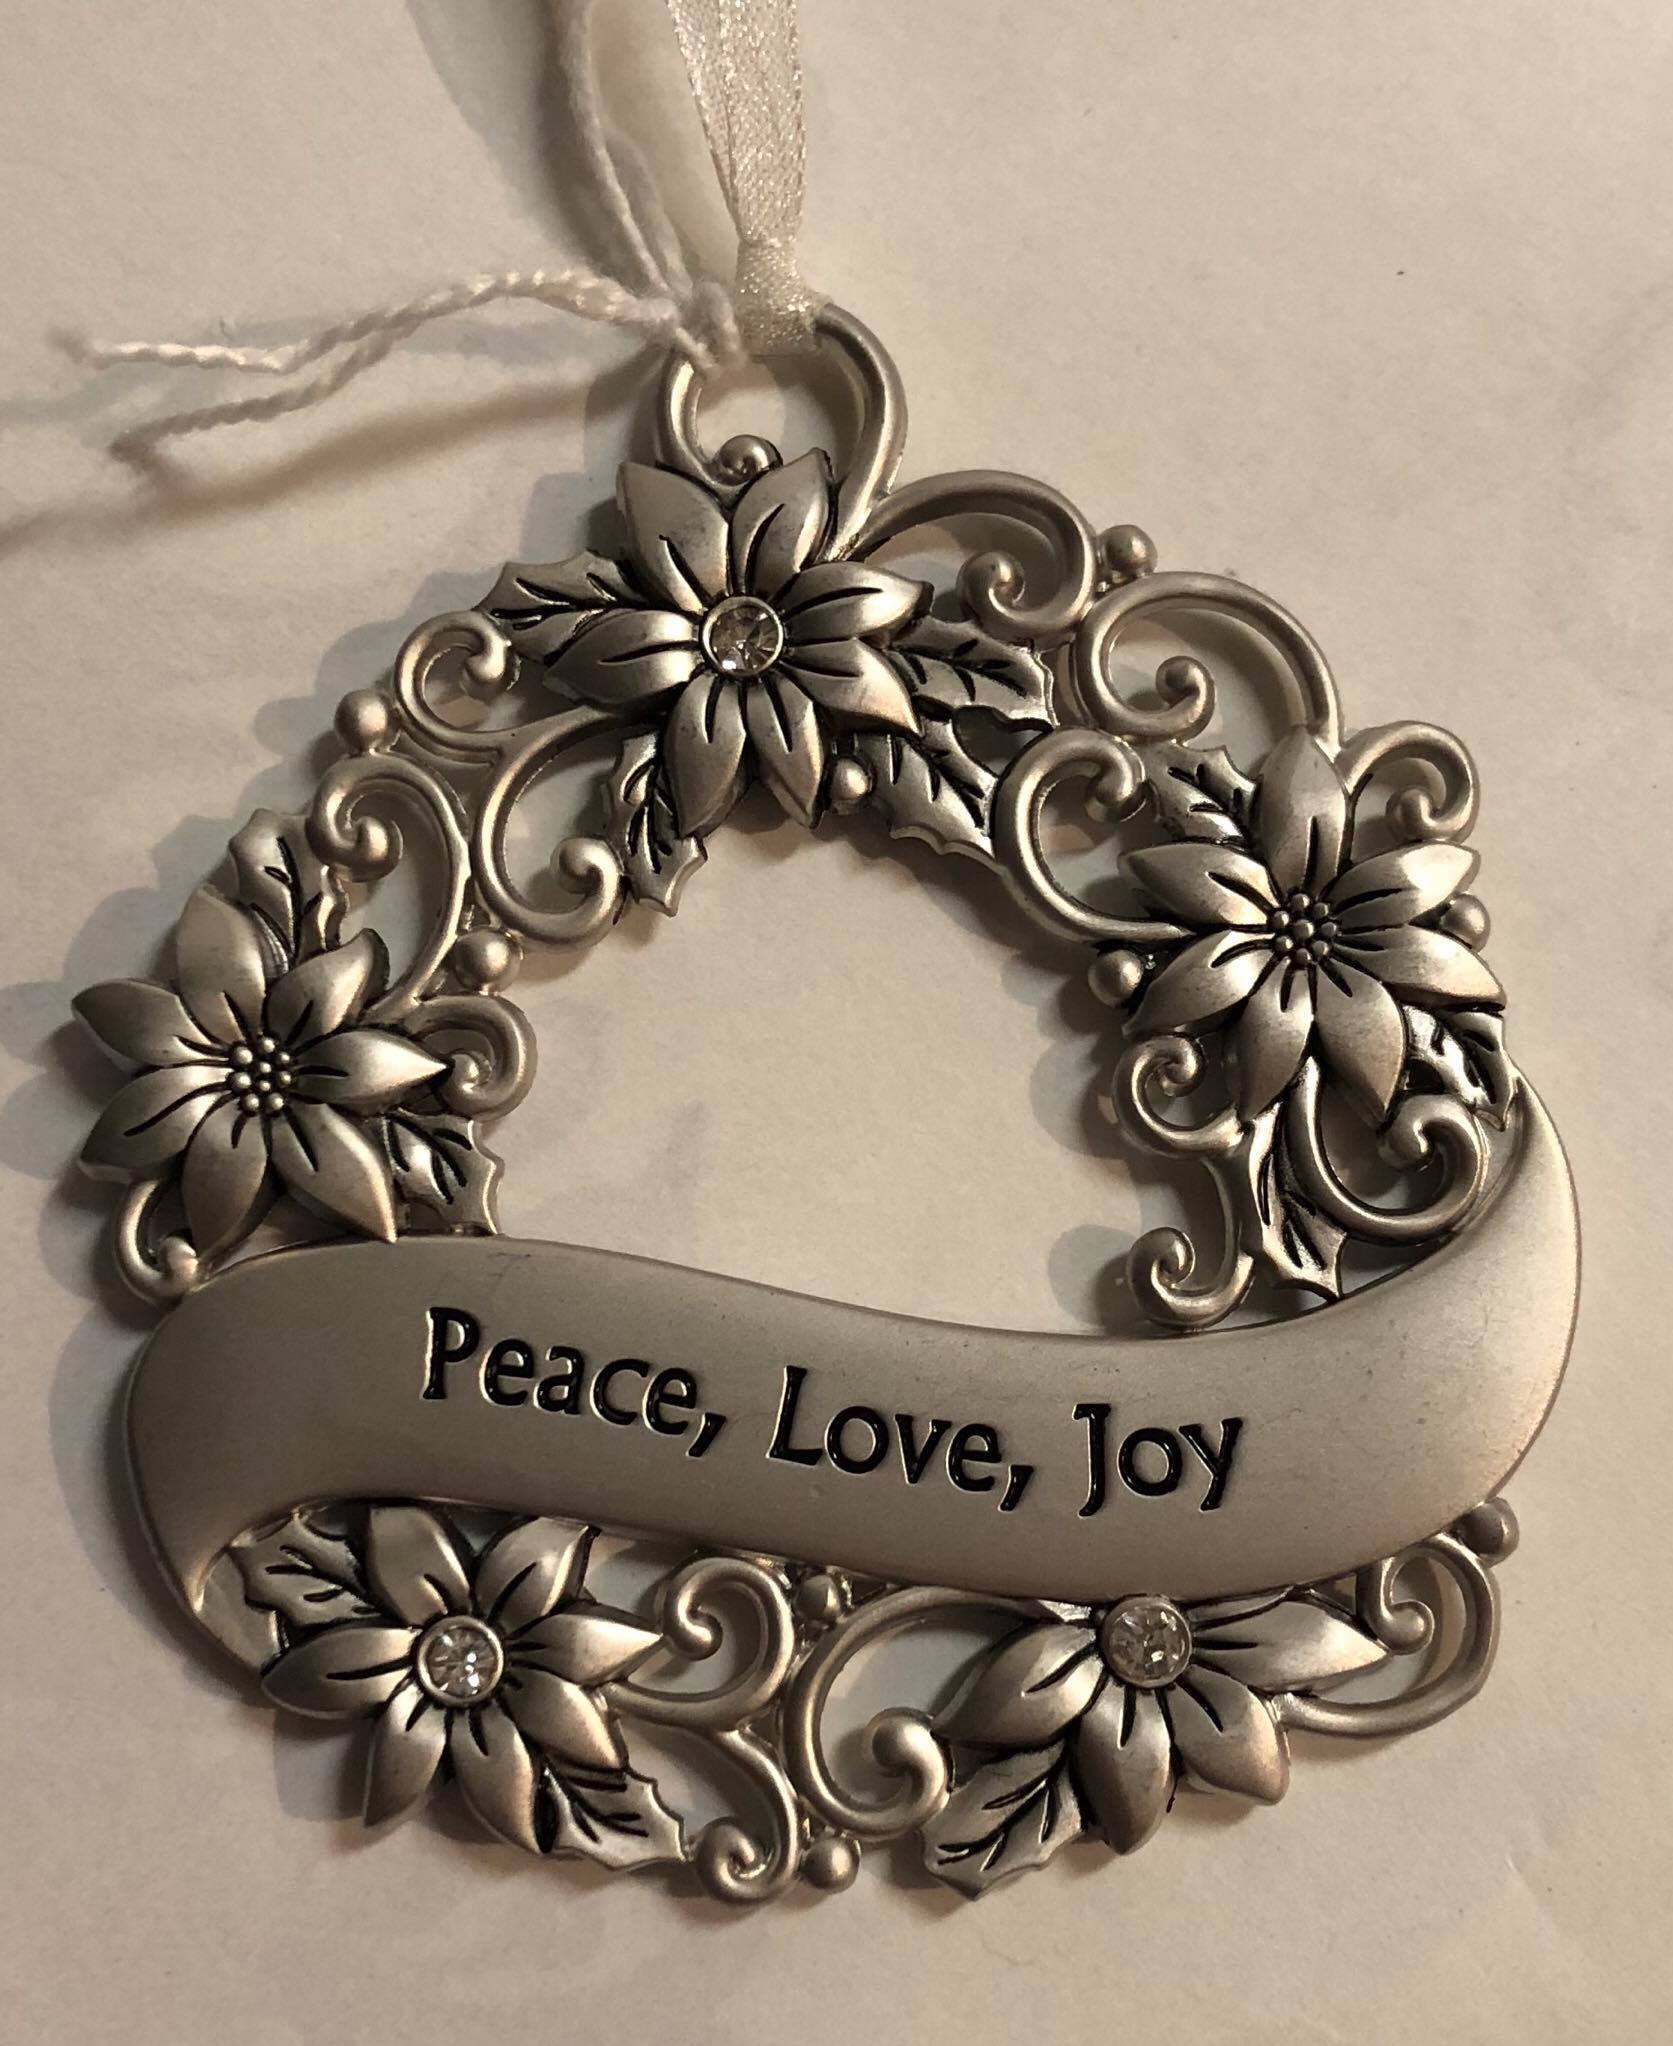 Wreath Tree Ornament "Peace, Love, Joy"